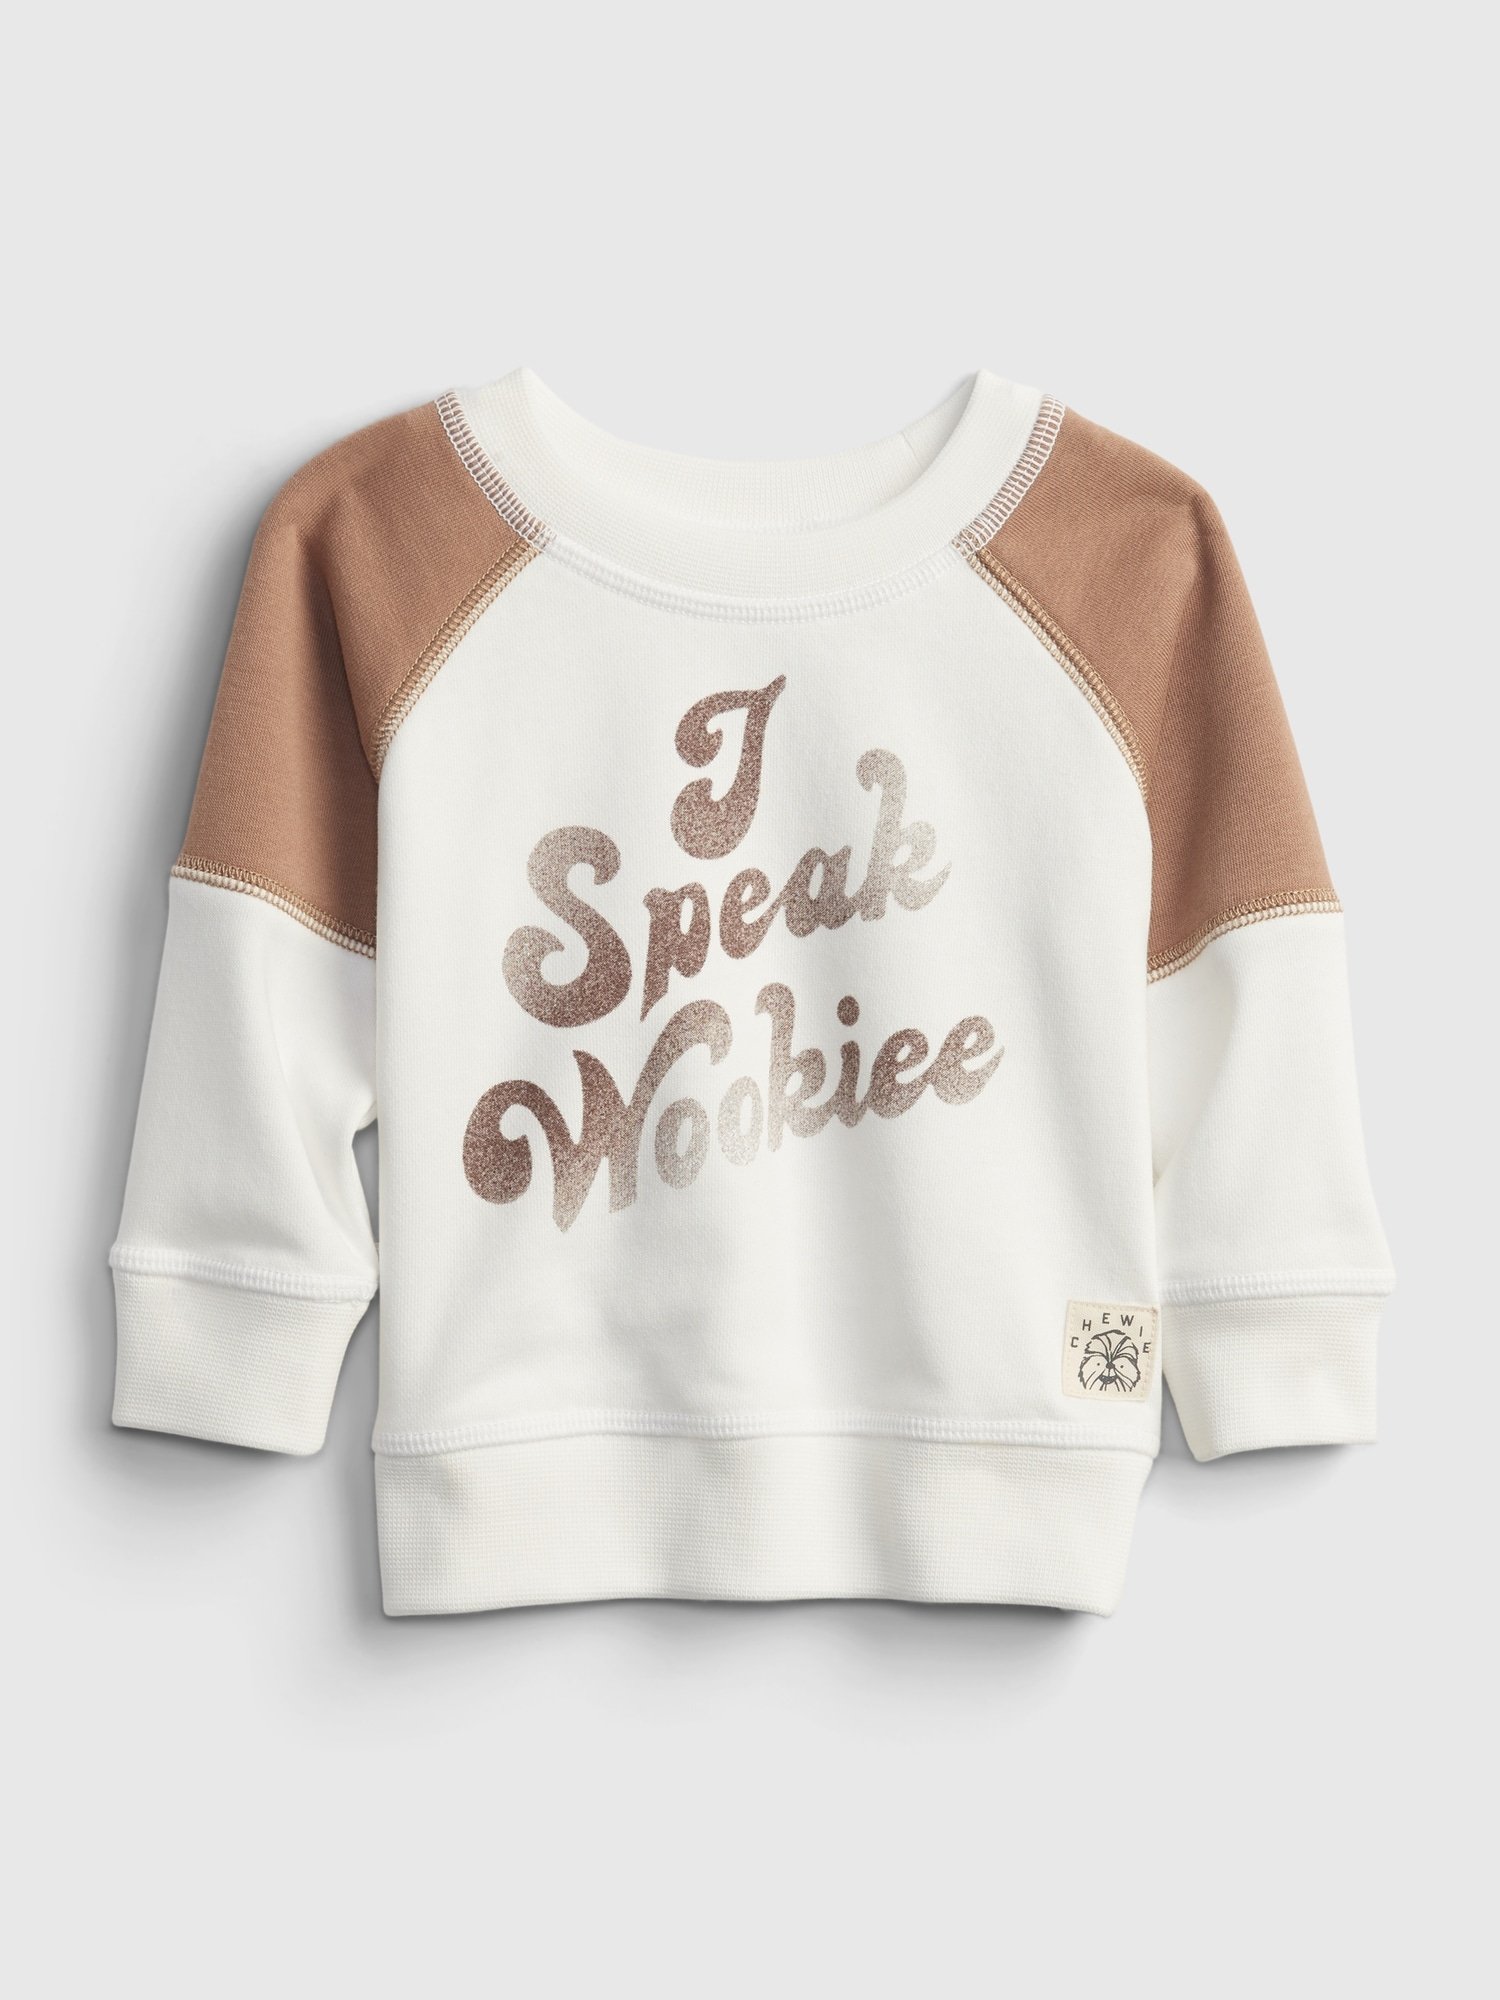 Star Wars™ Sweatshirt product image